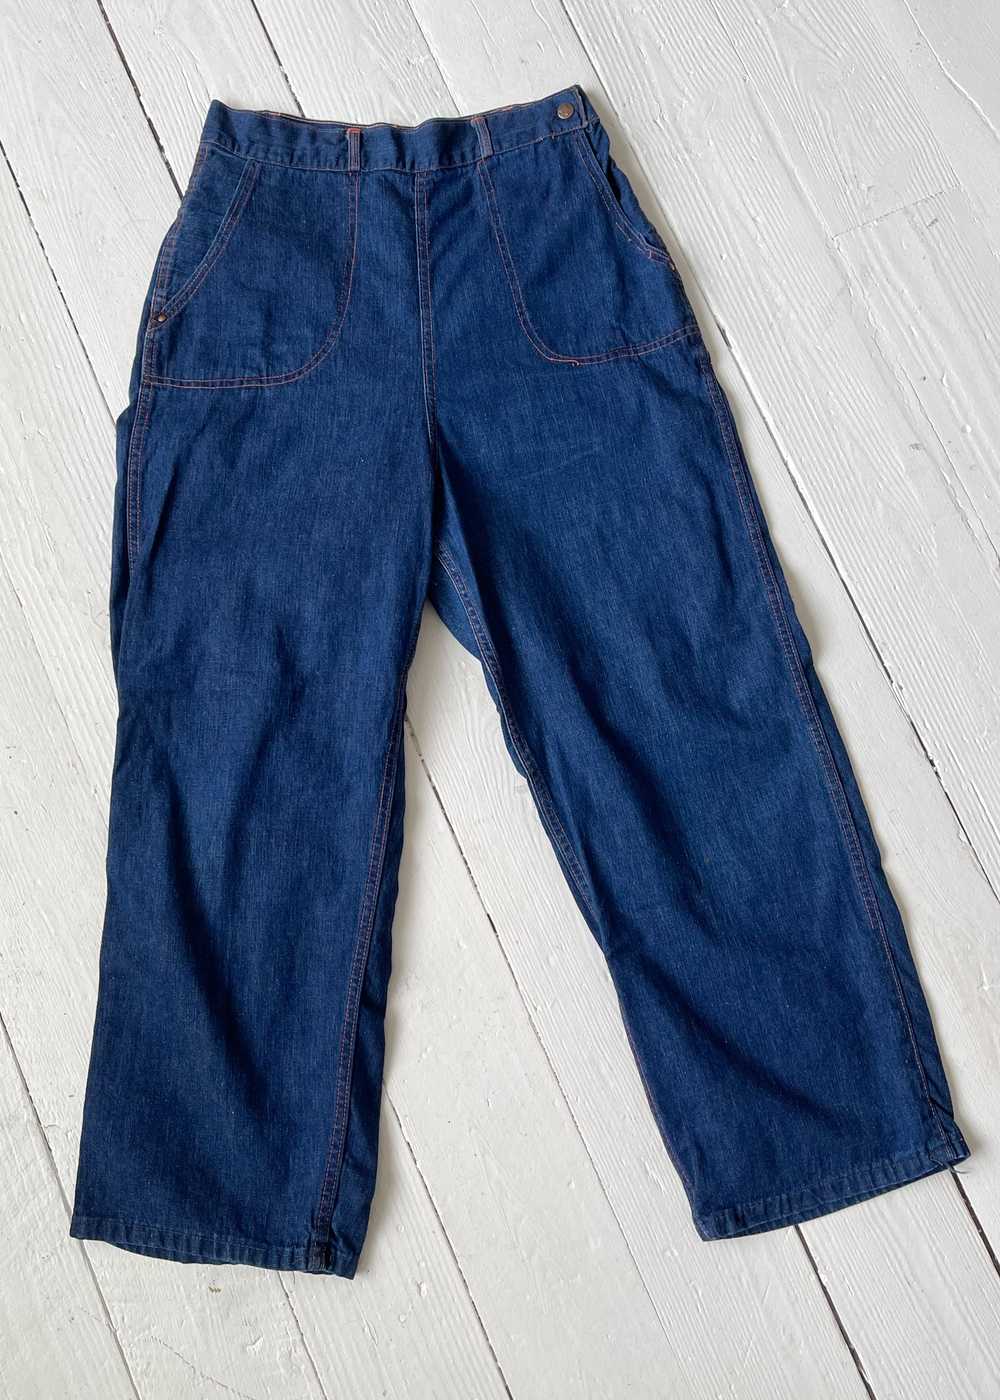 Vintage 1950s Side Zip Jeans - image 3